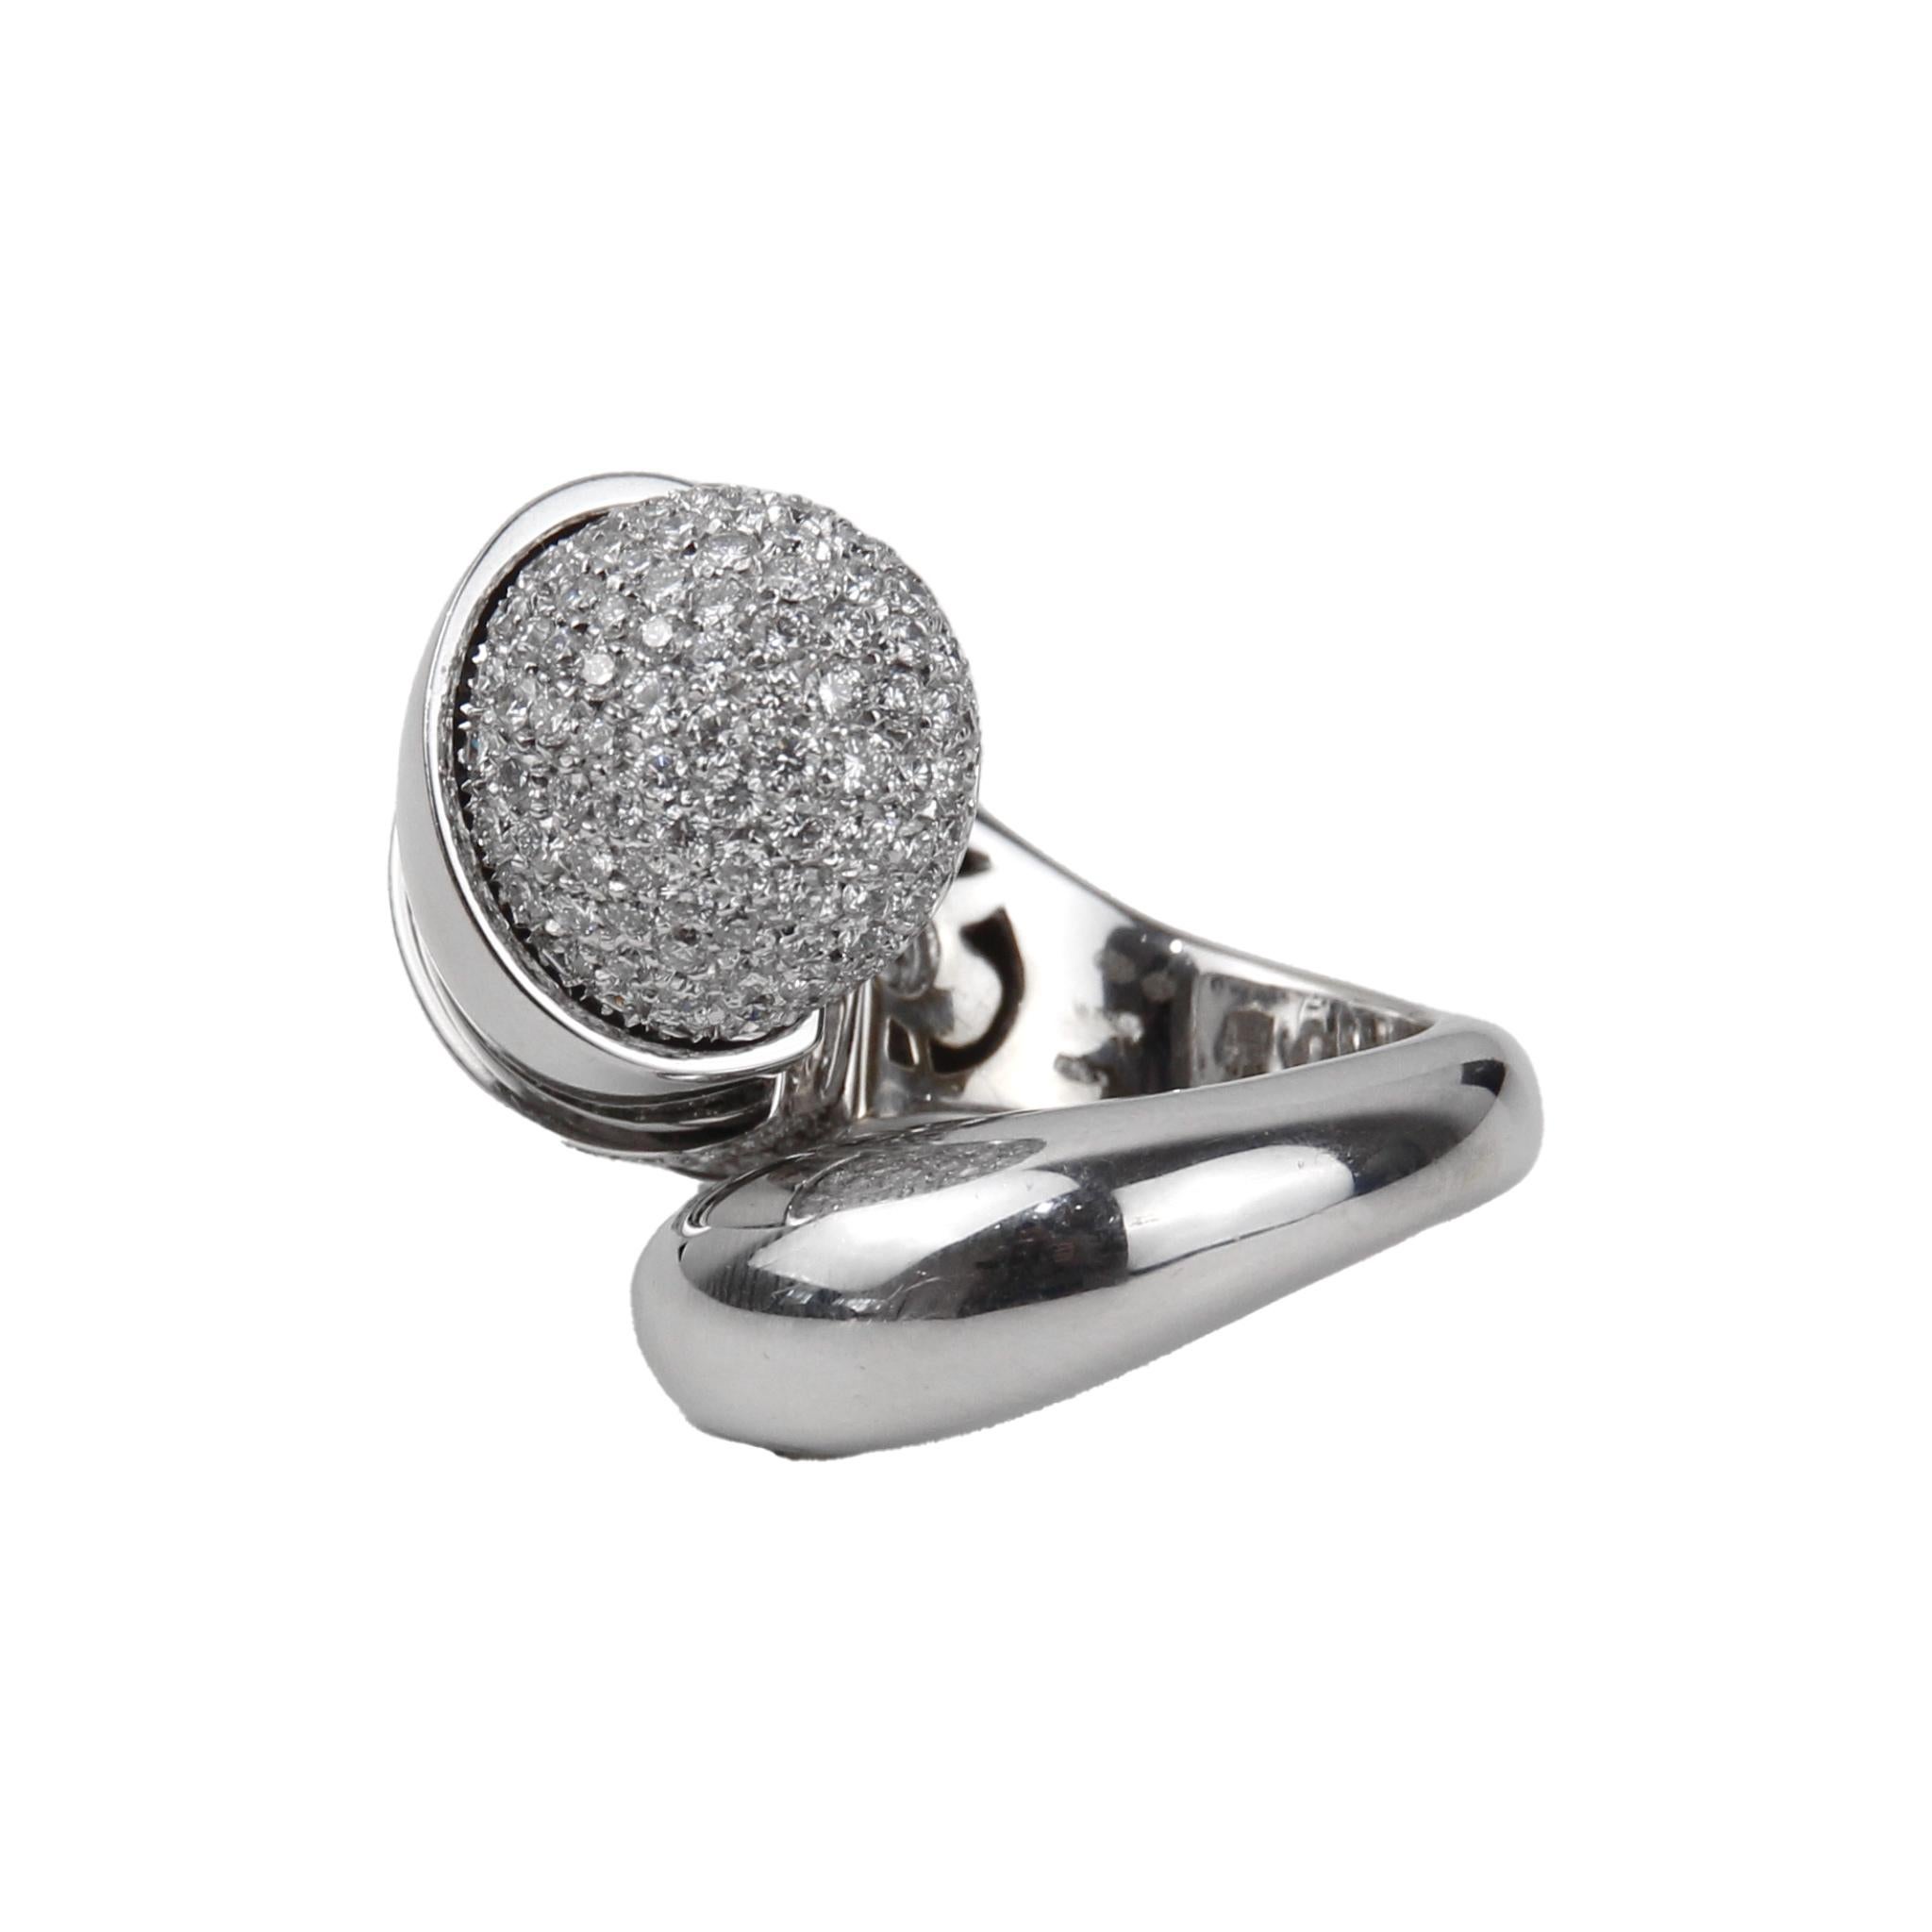 De Grissogono Diamond Ring 18K White Gold
Diamonds: 3.80ctw
Ring Size: 6.75
Retail $28,900.00
SKU: DGR01061
Model number: 55052/01